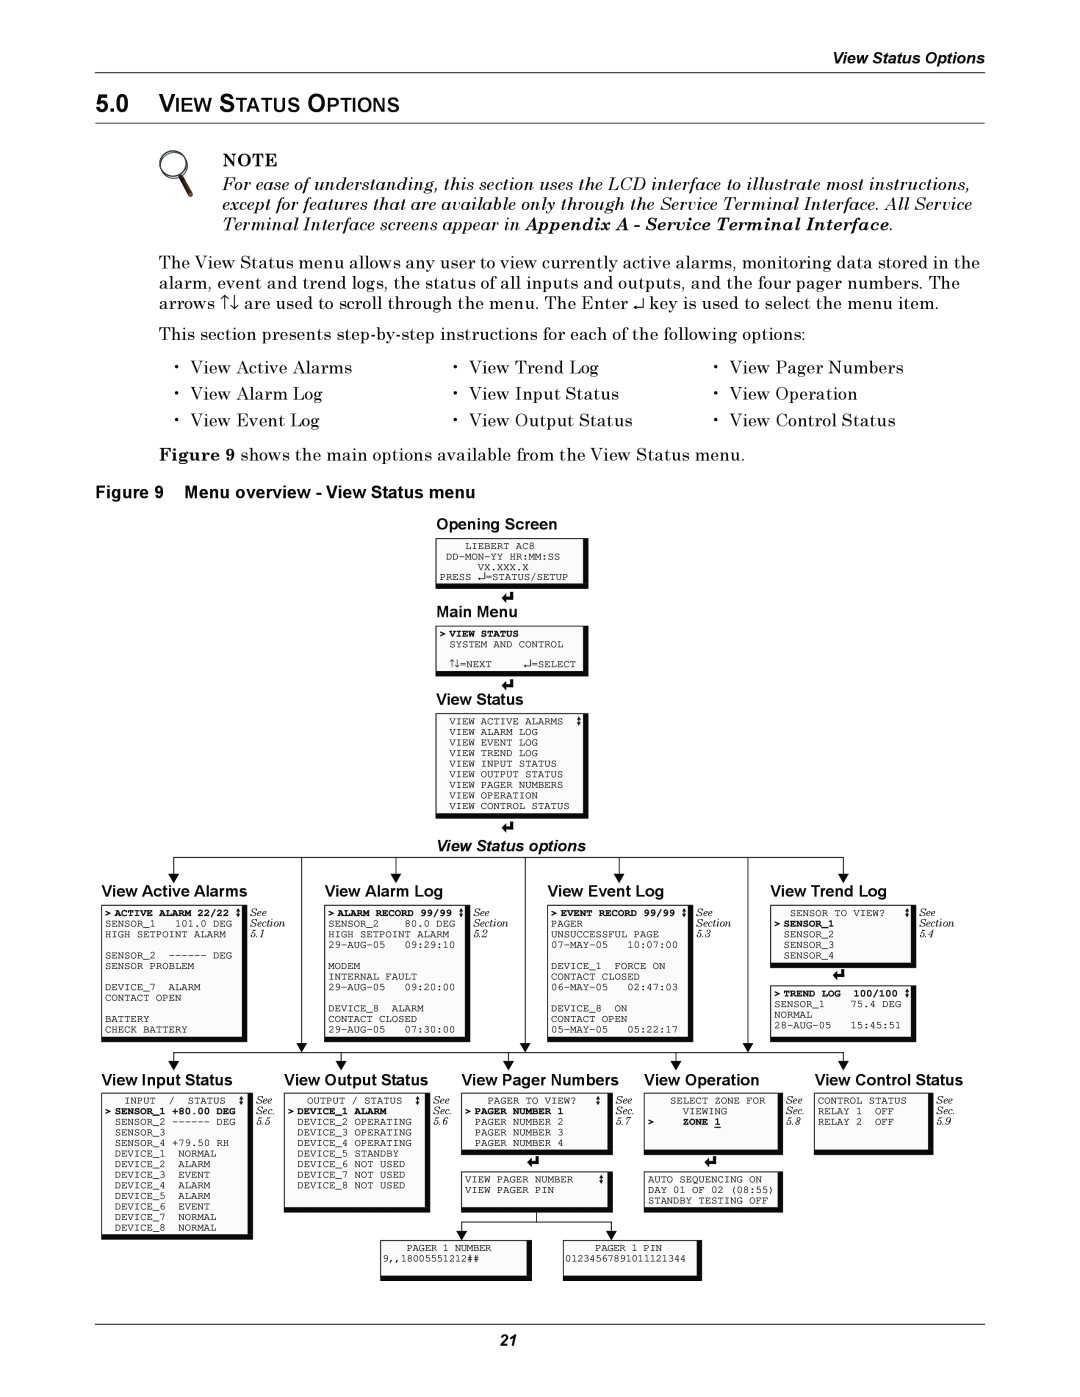 Emerson AC8 user manual 5.0VIEW STATUS OPTIONS, Menu overview - View Status menu 